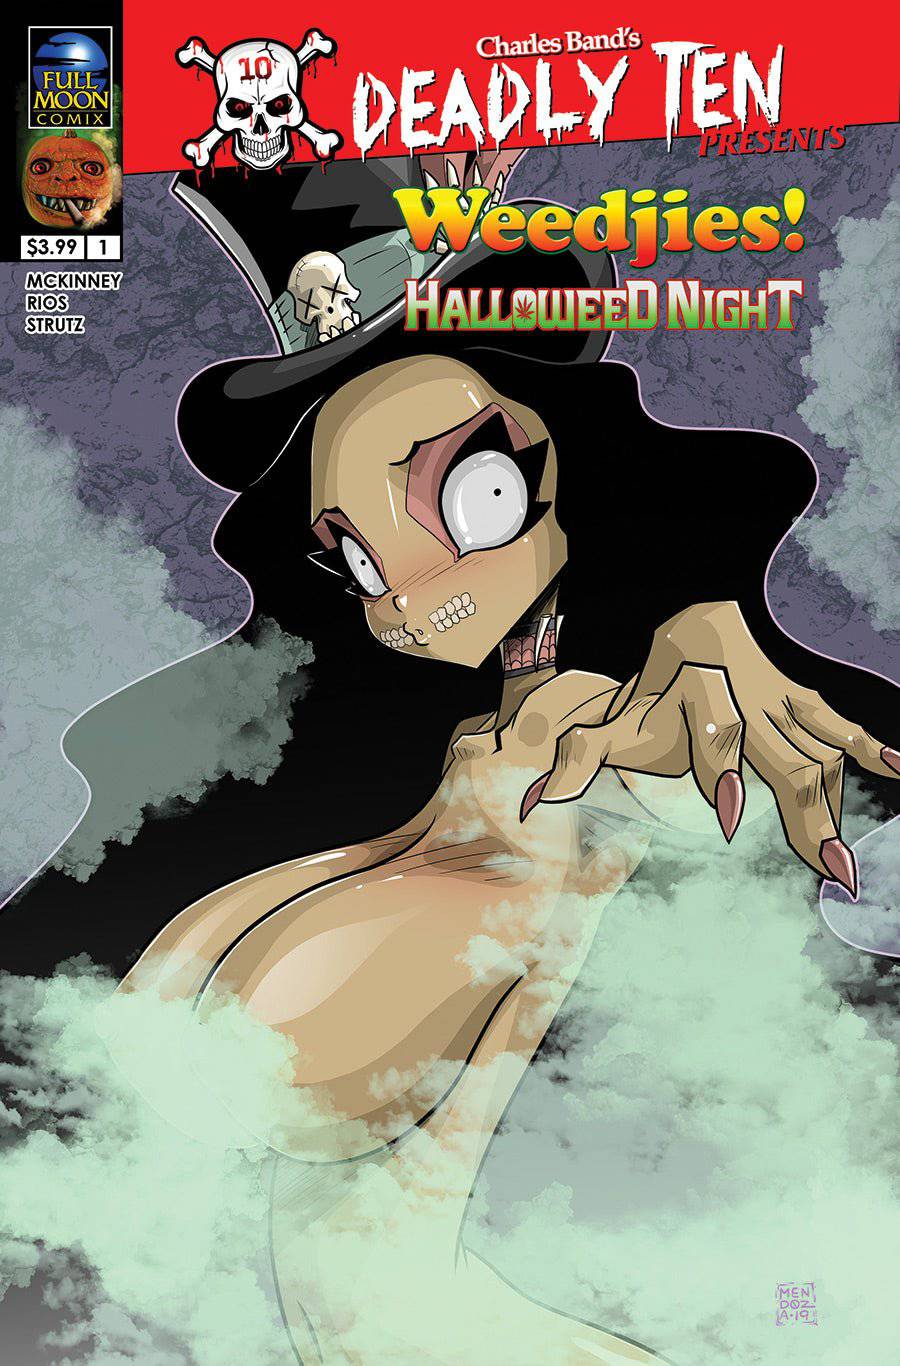 Deadly Ten Presents #2: Weedjies! Halloweed Night (Dan Mendoza R cover)